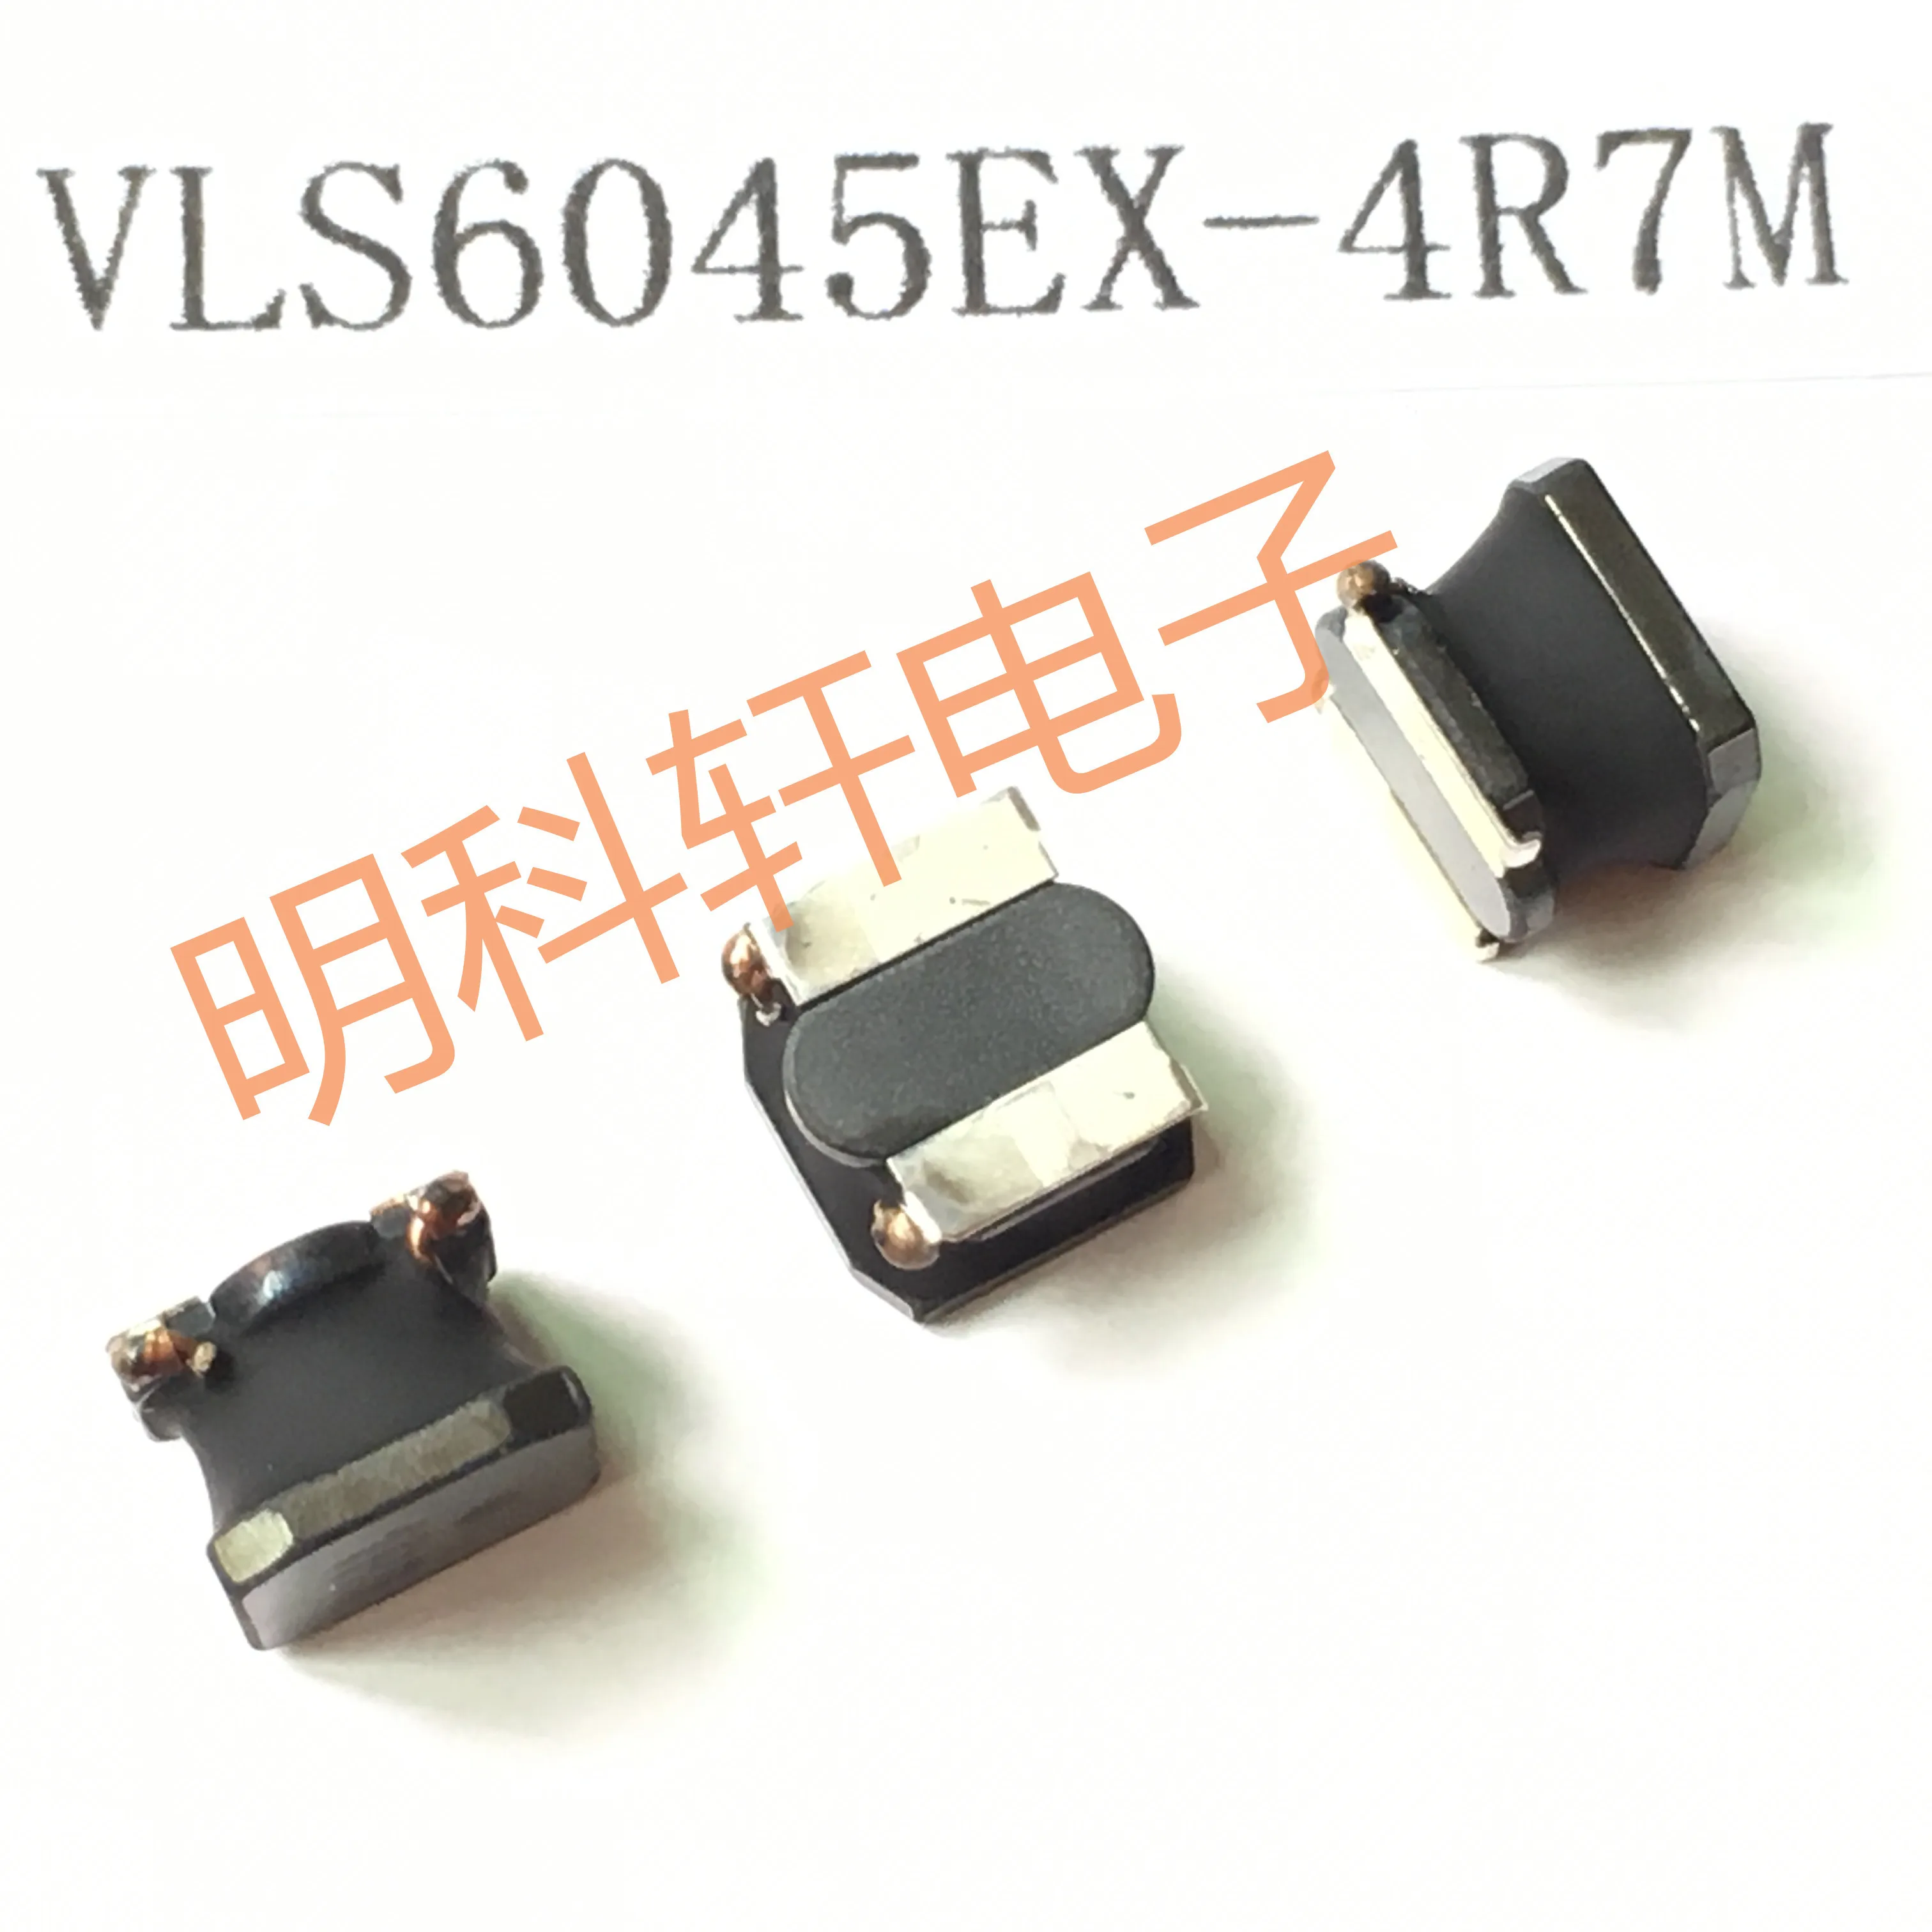 

20pcs orginal new VLS6045EX-4R7M SMD power inductor 4.7UH 6.0*6.0*4.5